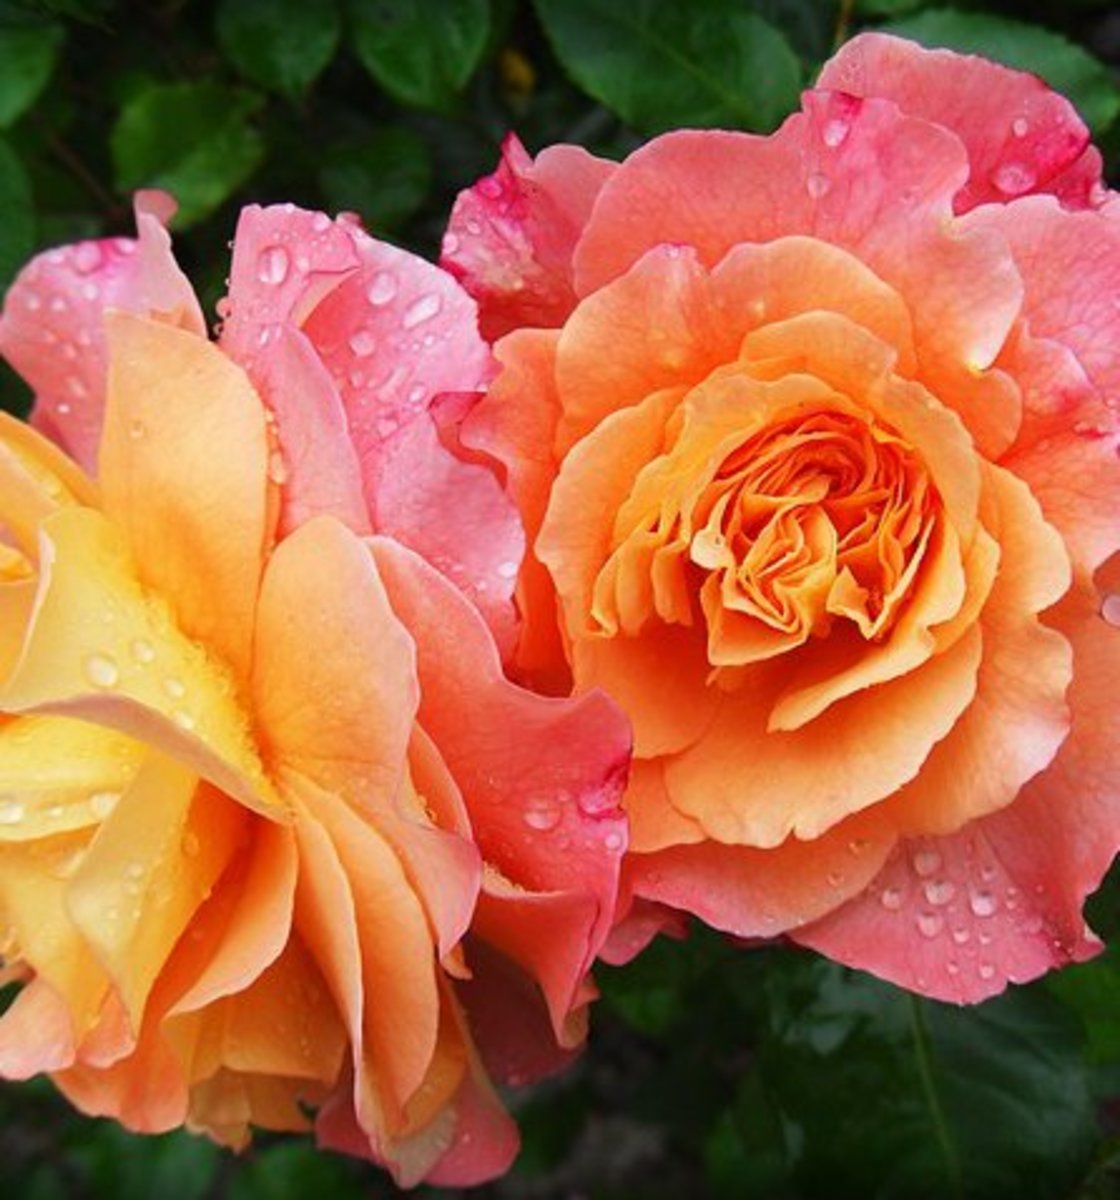 few sentences about rose flower